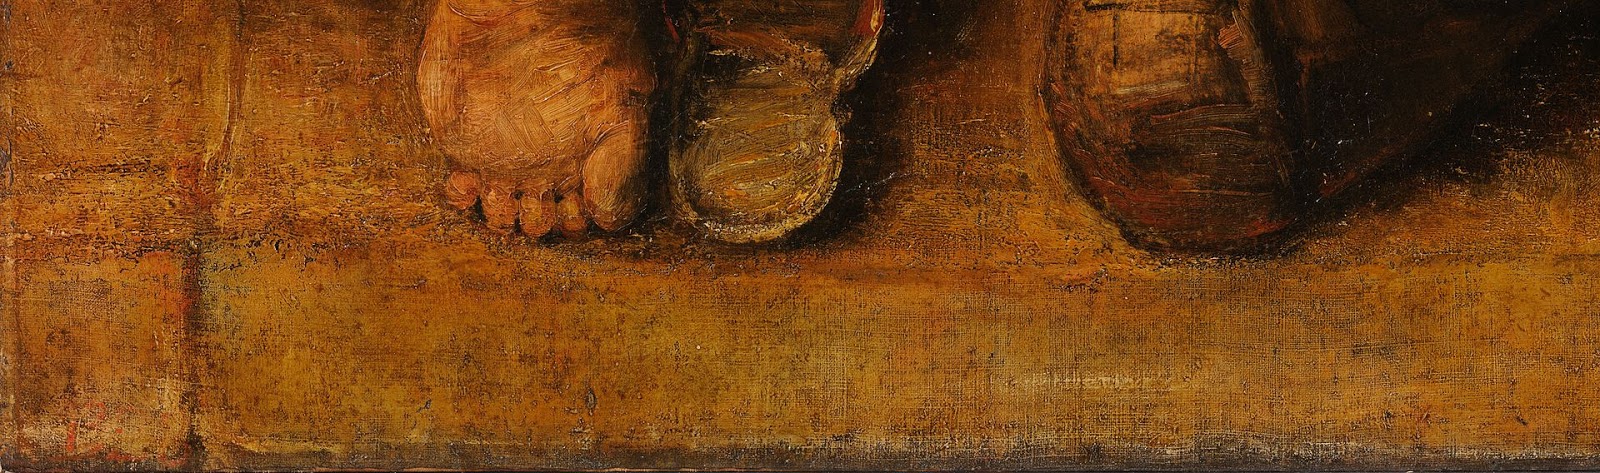 Rembrandt-1606-1669 (356).jpg